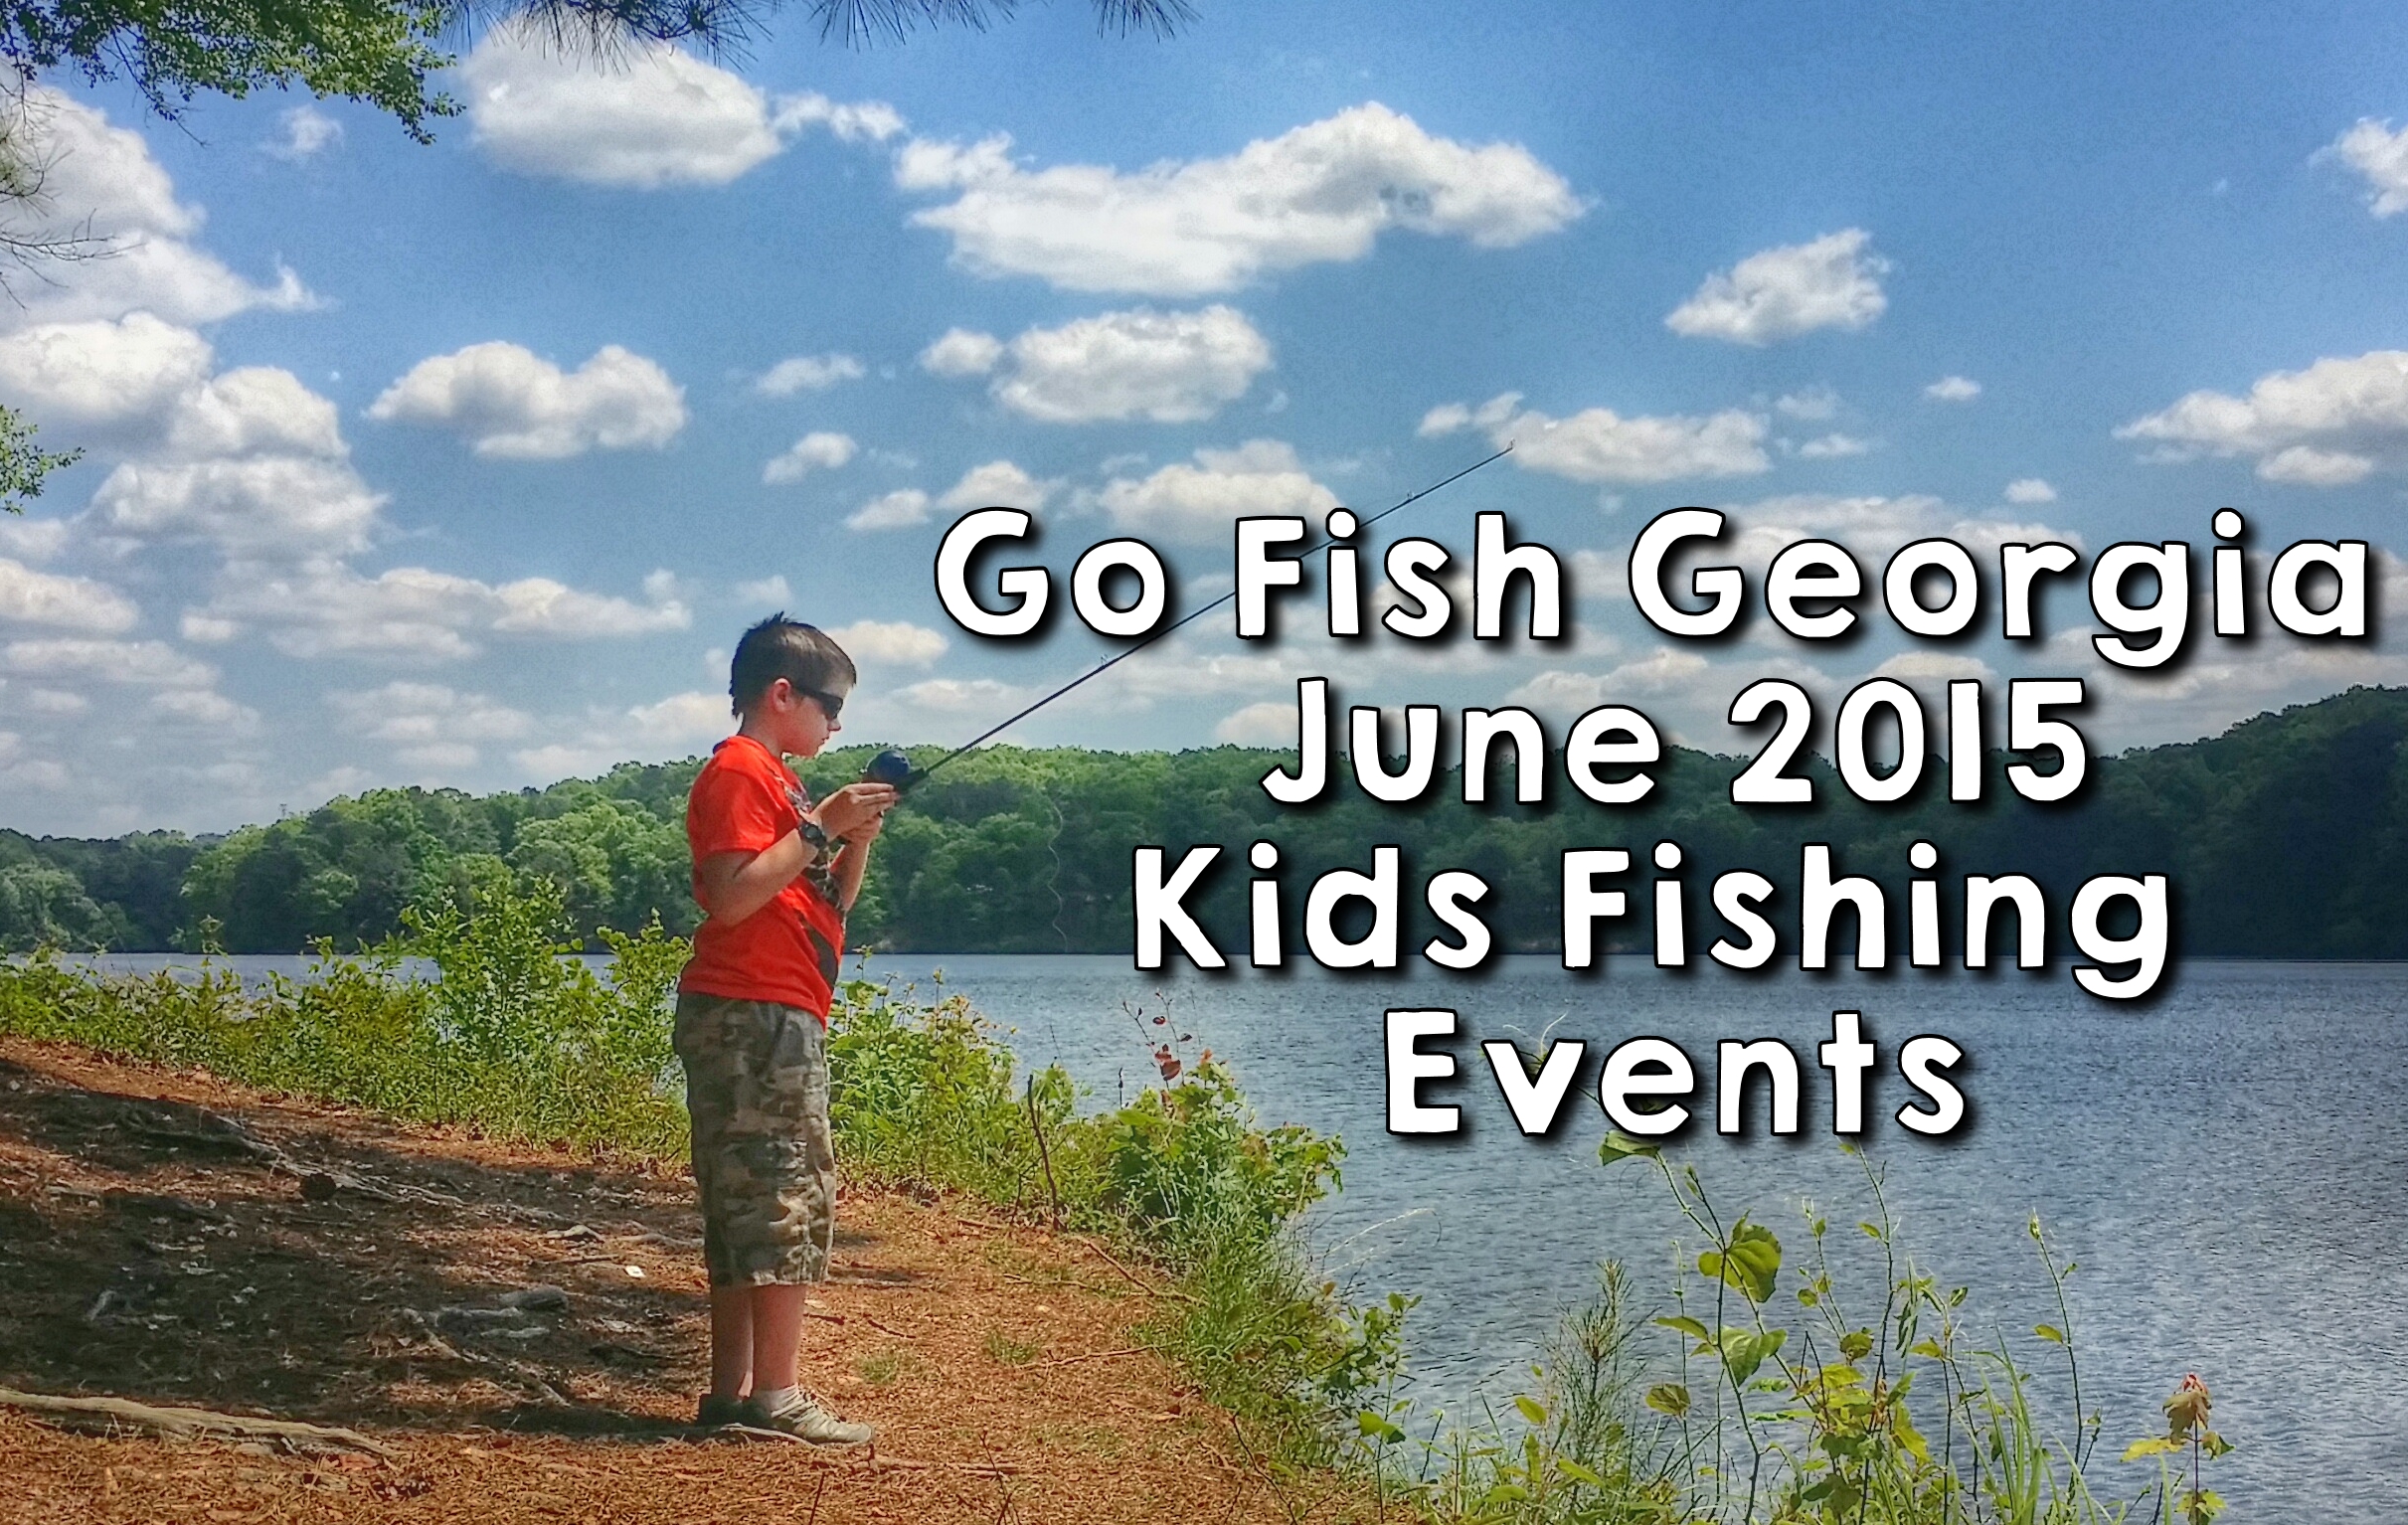 Go Fish Georgia Kids Fishing Events June 2015